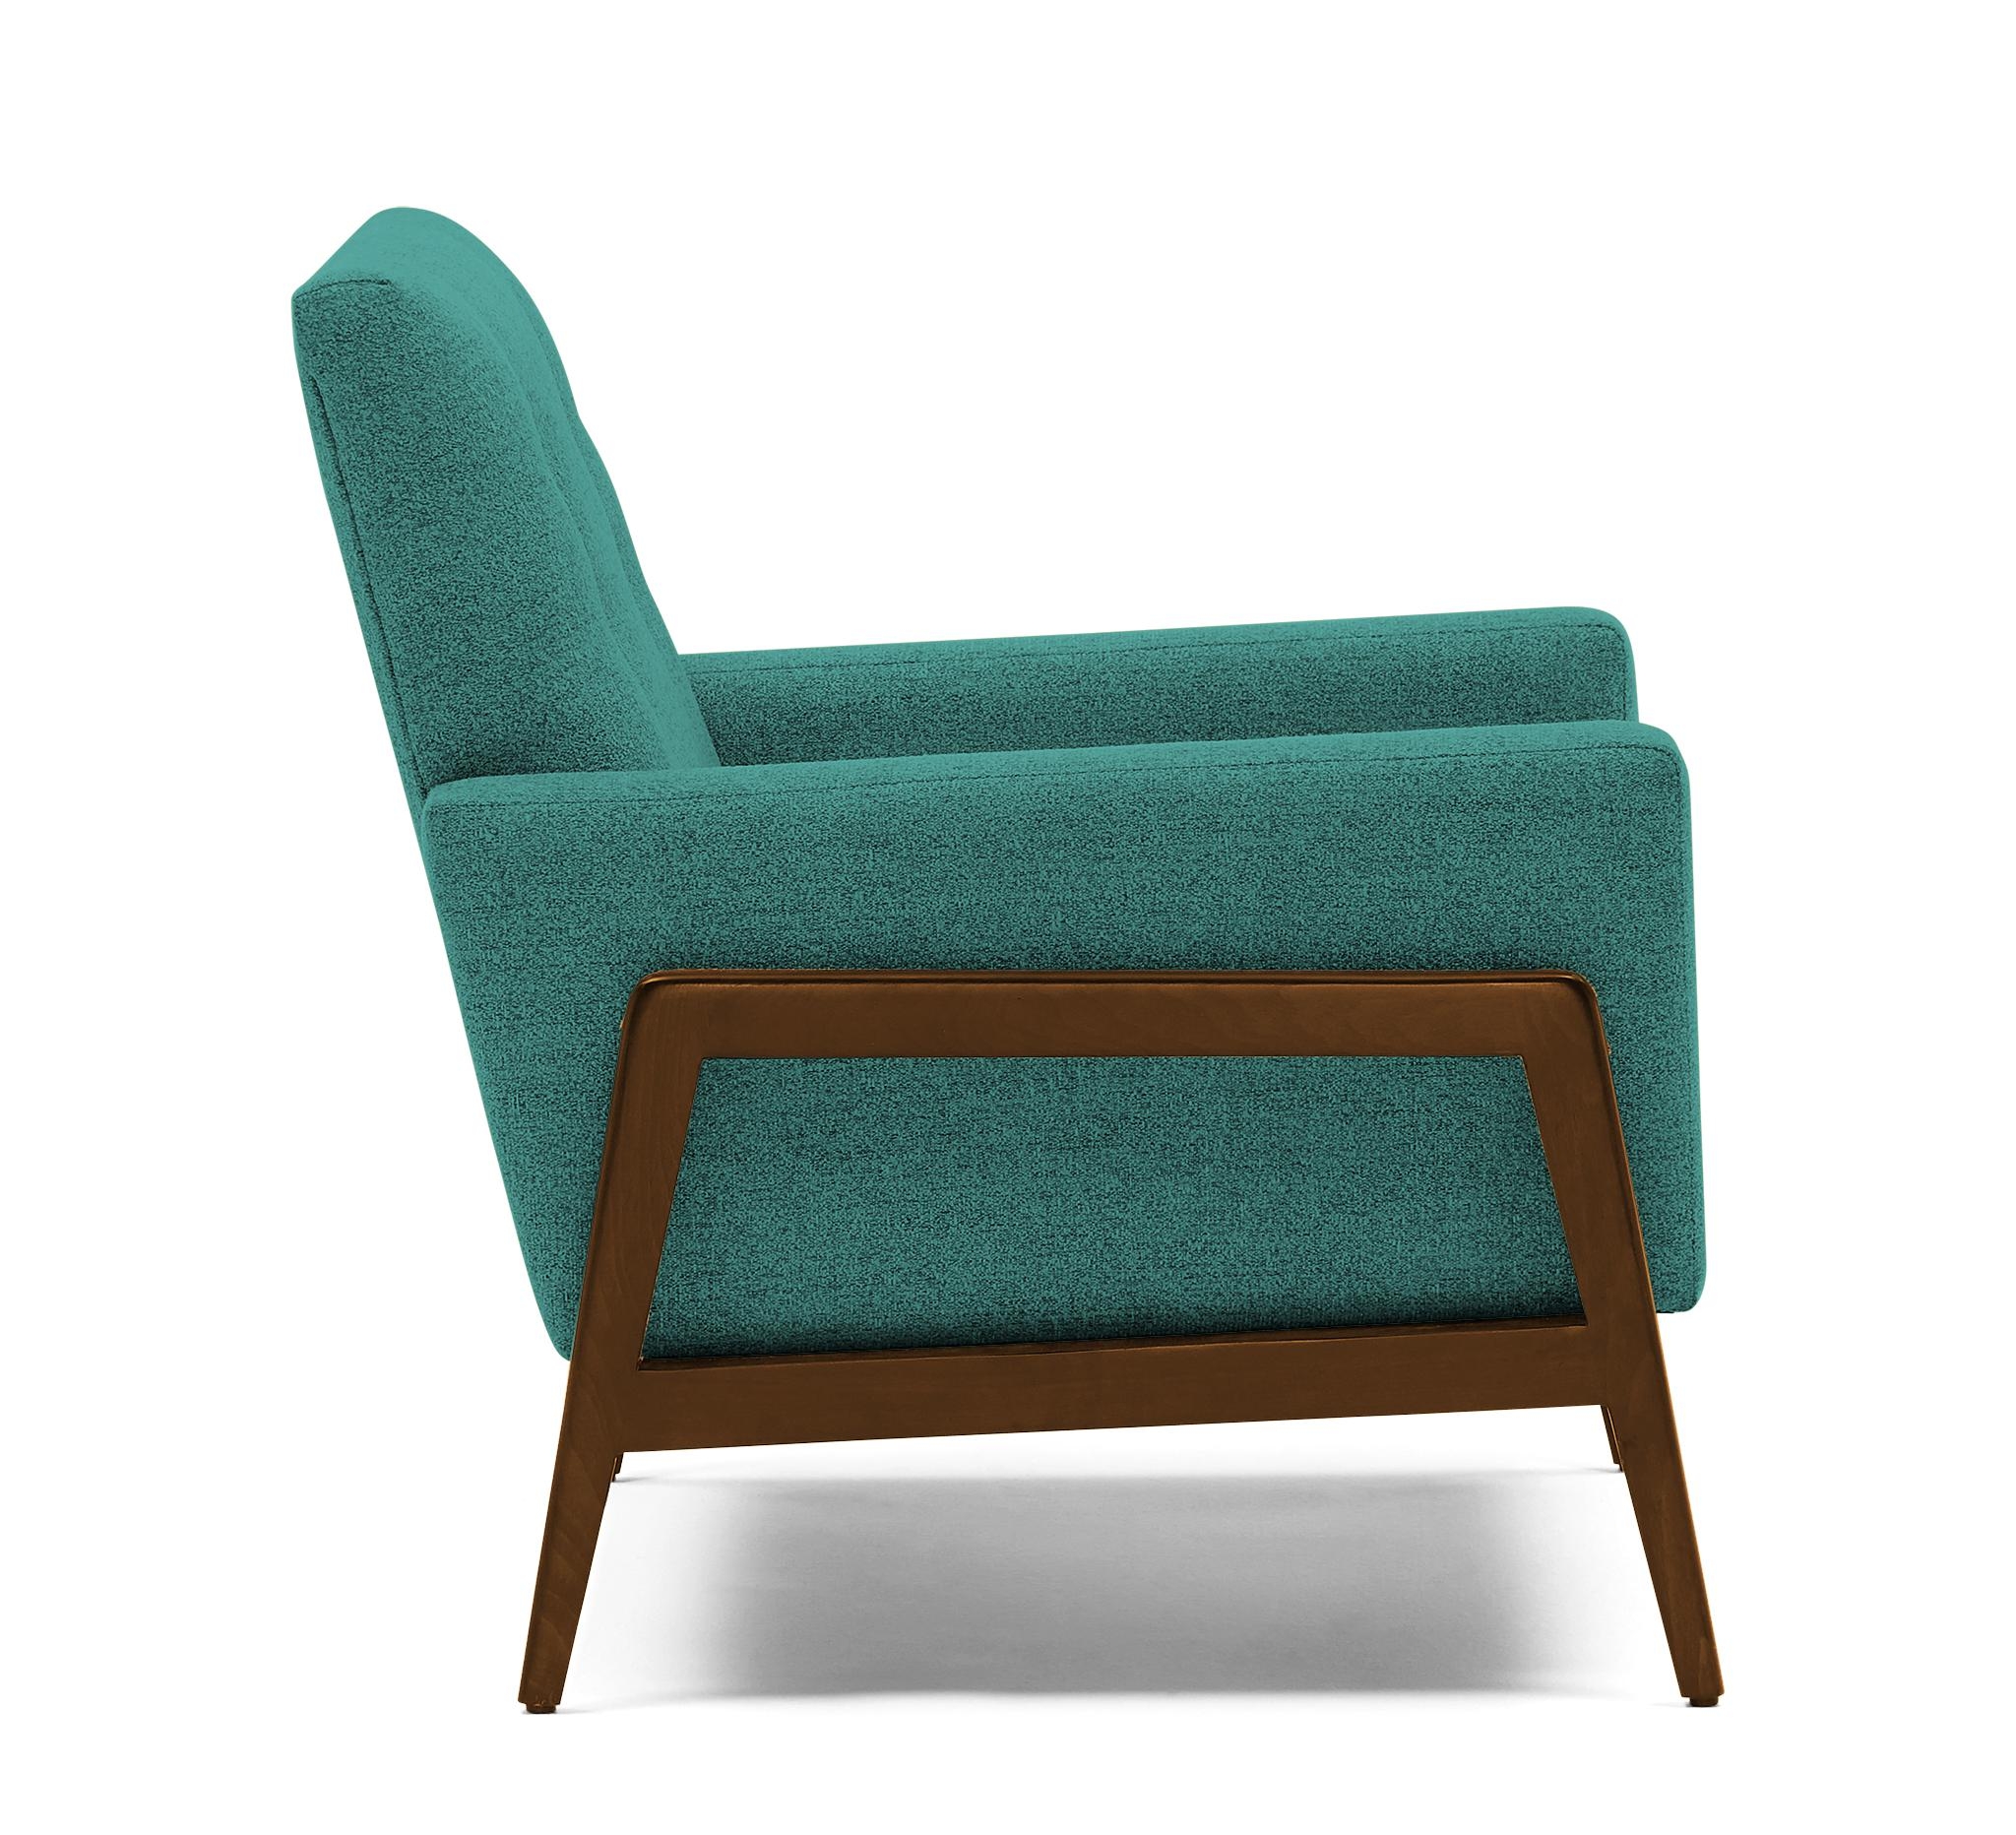 Green Clyde Mid Century Modern Chair - Essence Aqua - Mocha - Image 2